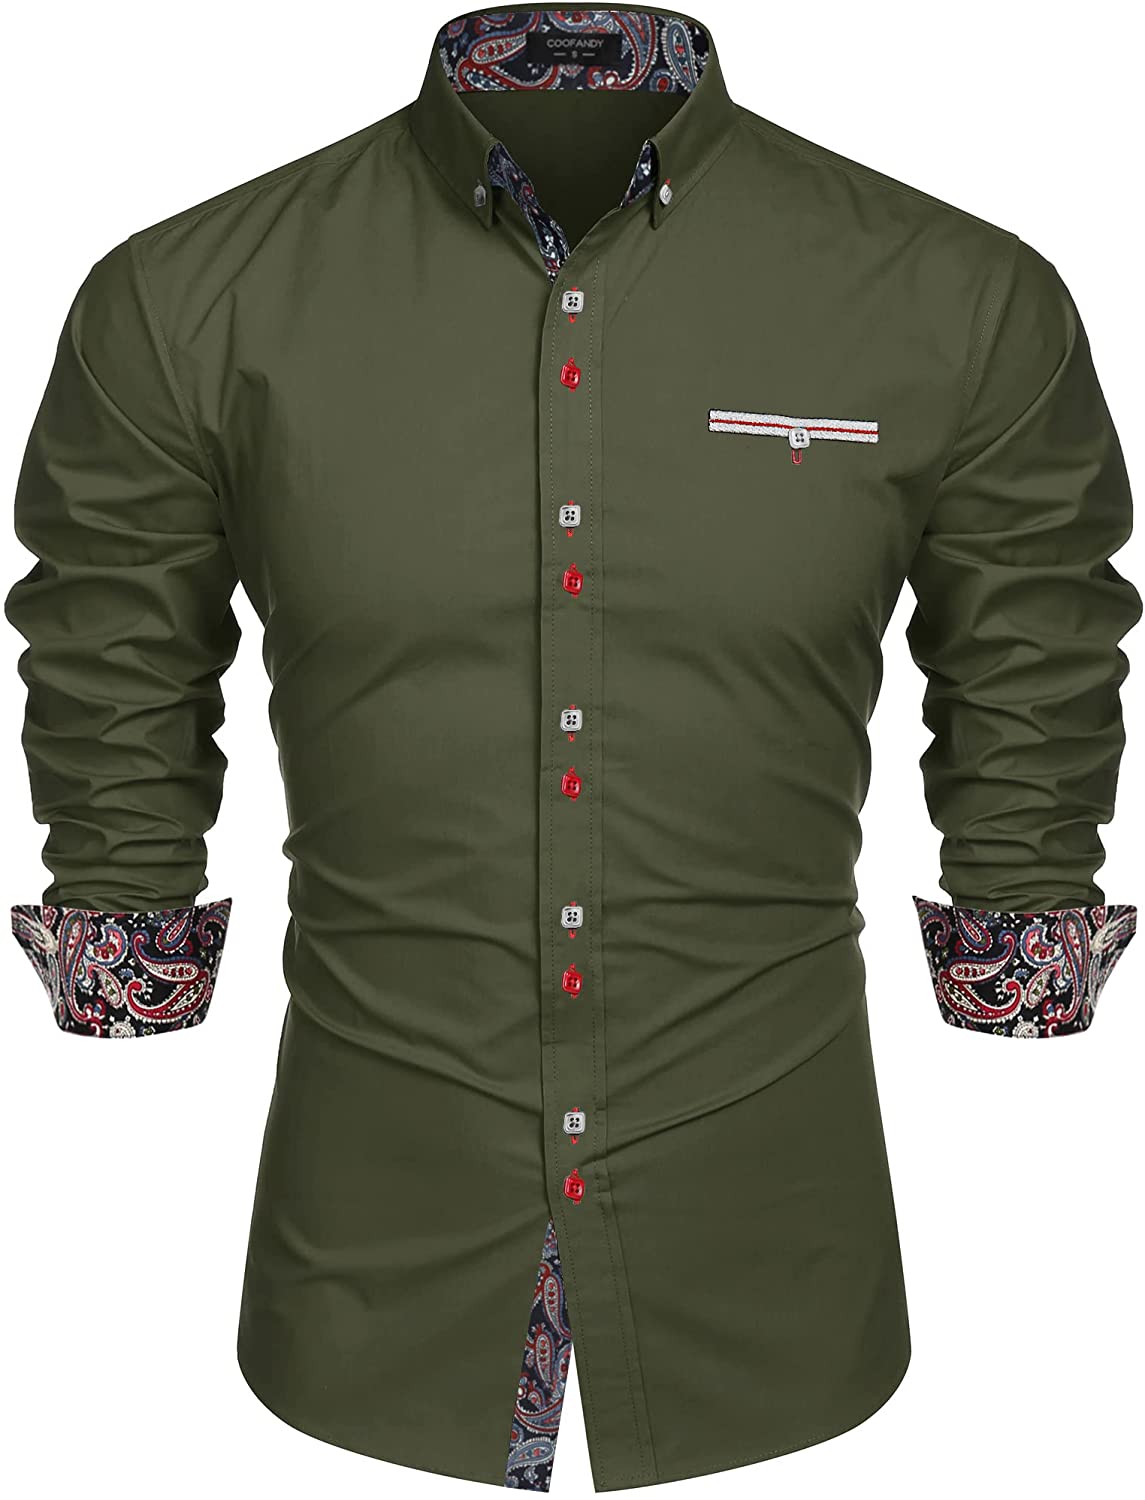 COOFANDY Men's Dress Shirt Long Sleeve Casual Button Down Shirts